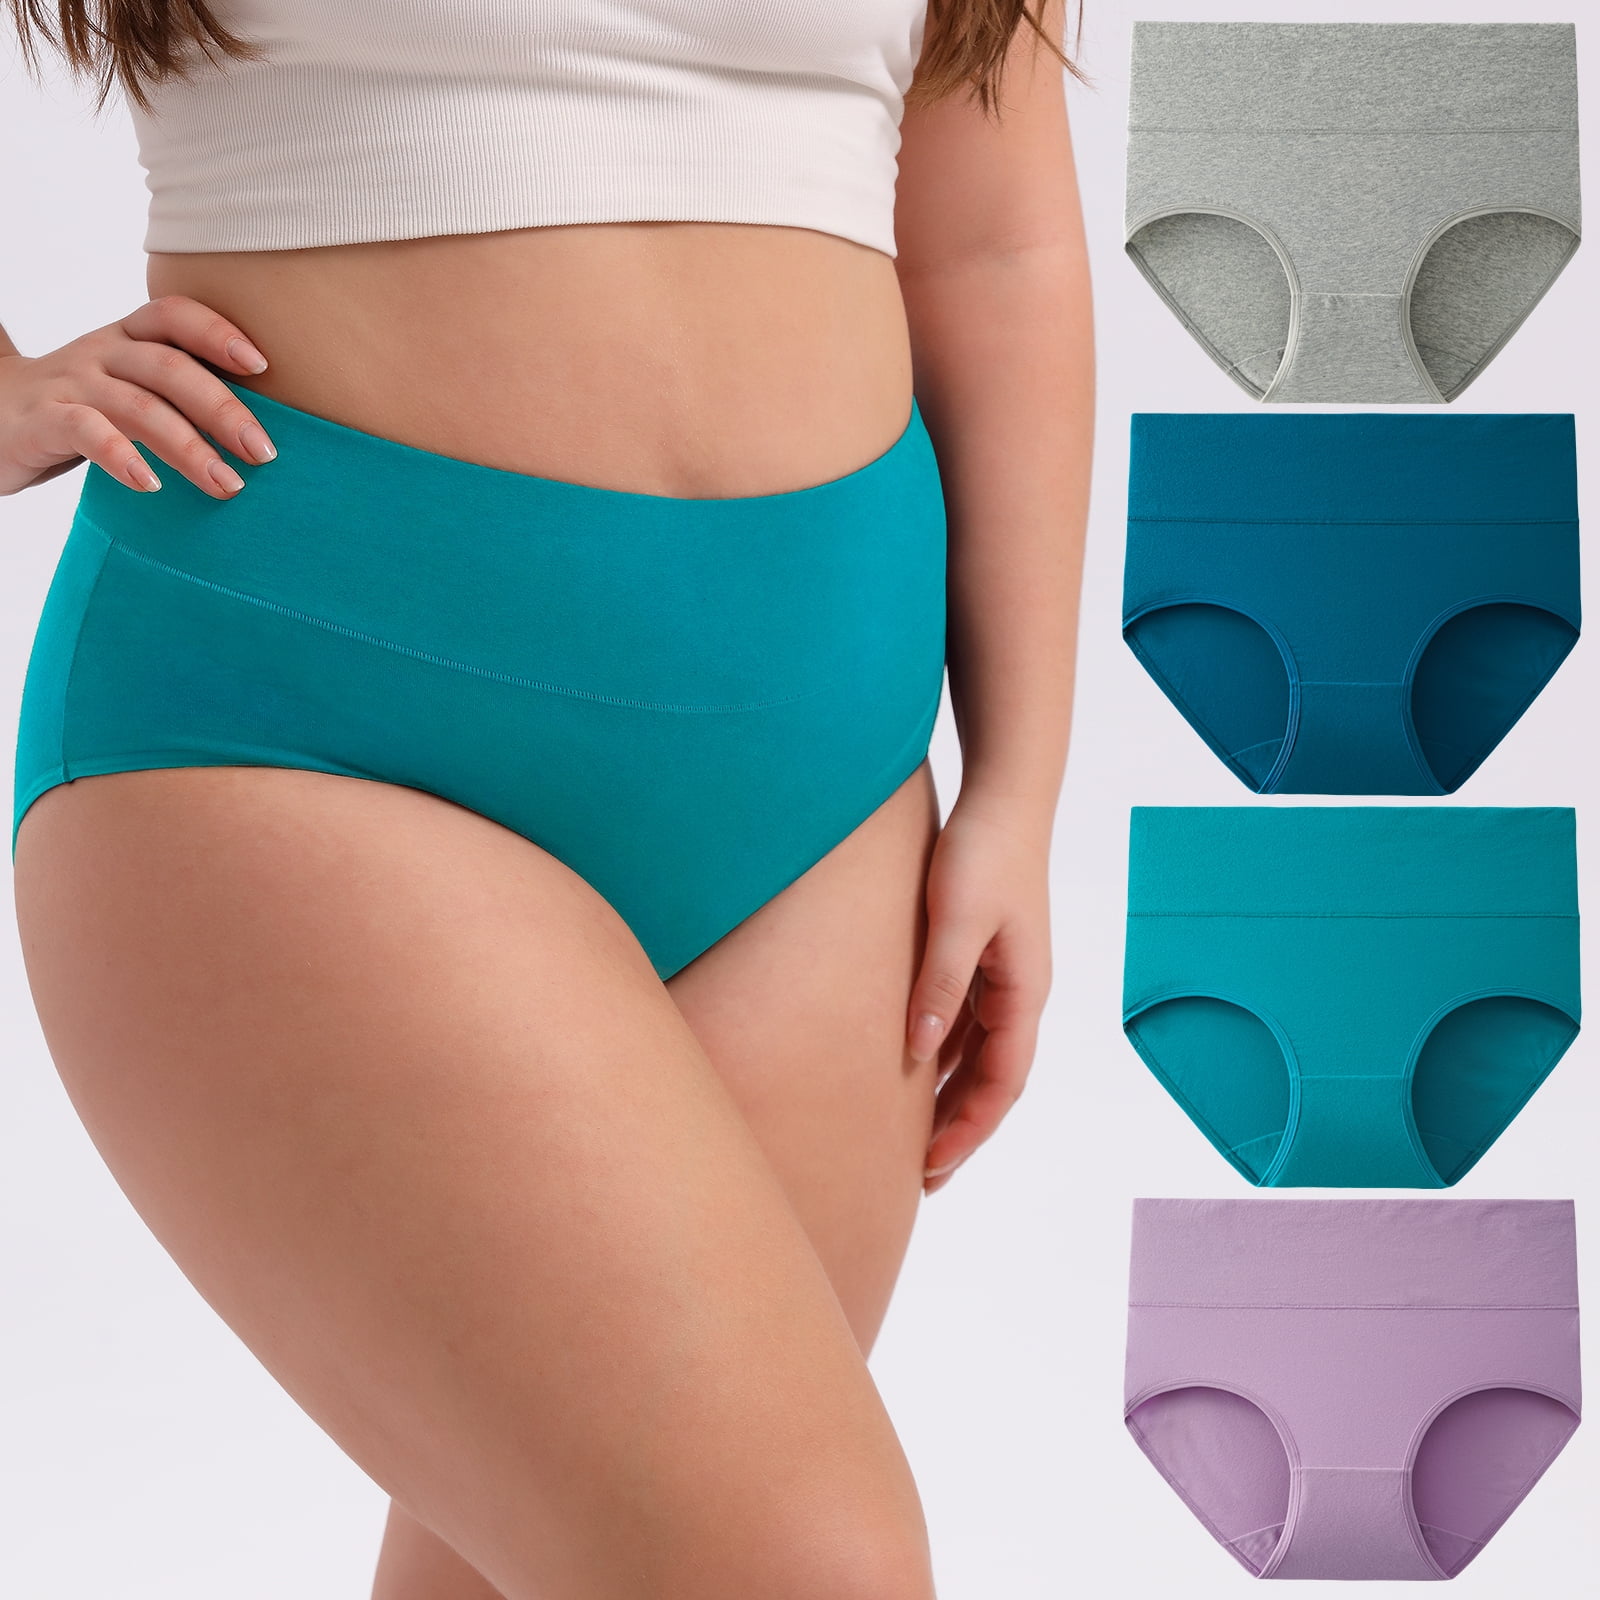 Panty Drop - Perfect Panty Cotton Brief - Plus Size Underwear 